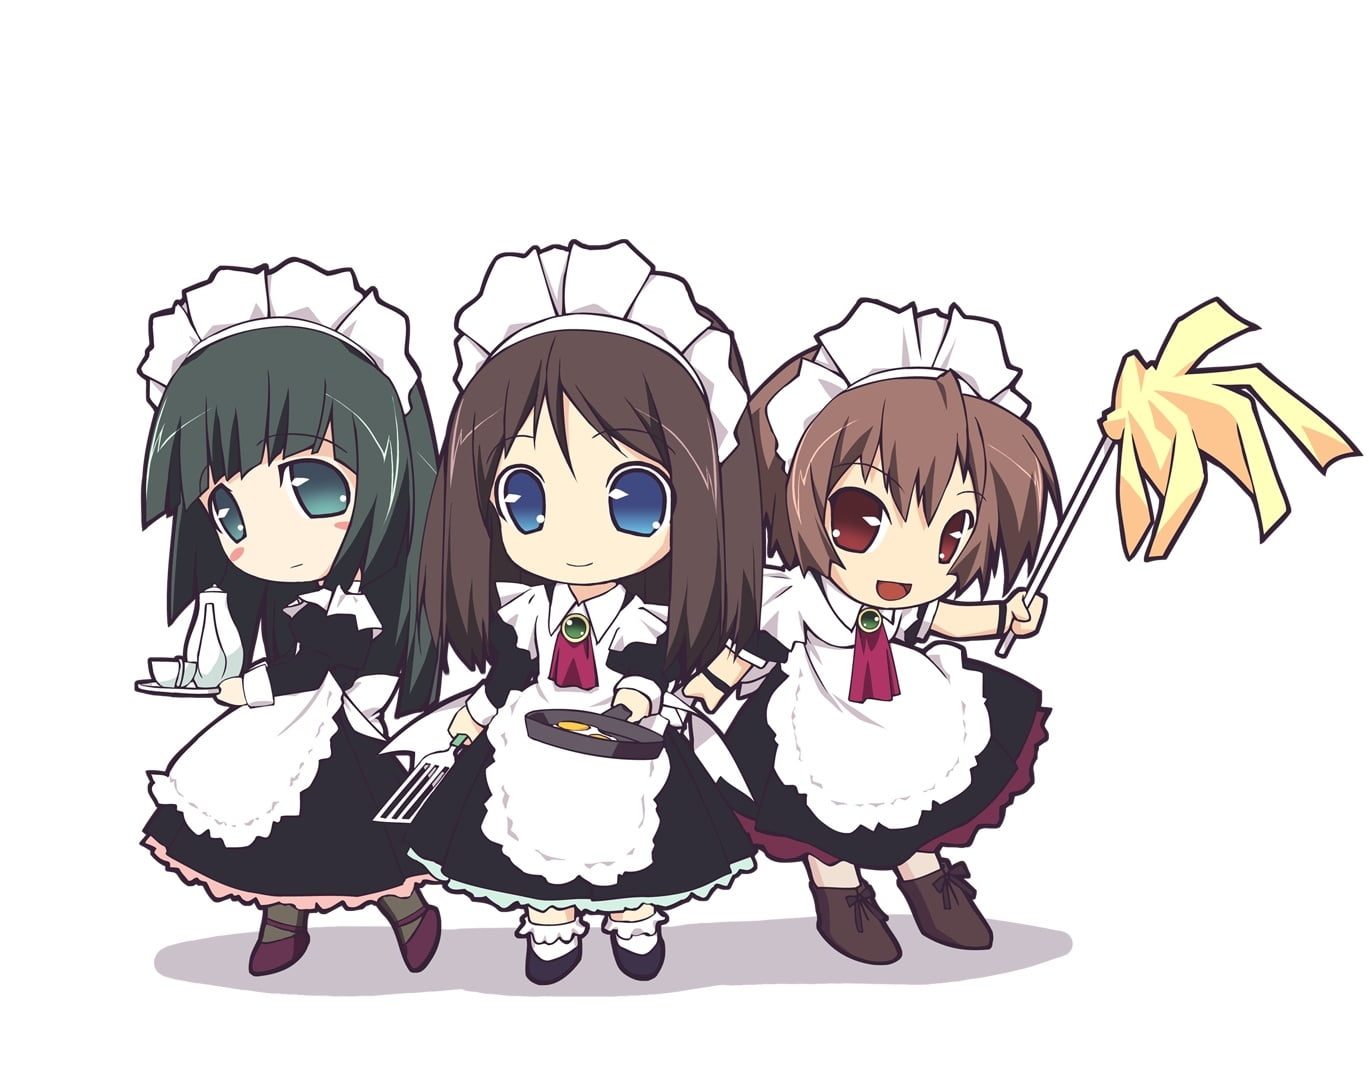 anime maid illustration screenshot